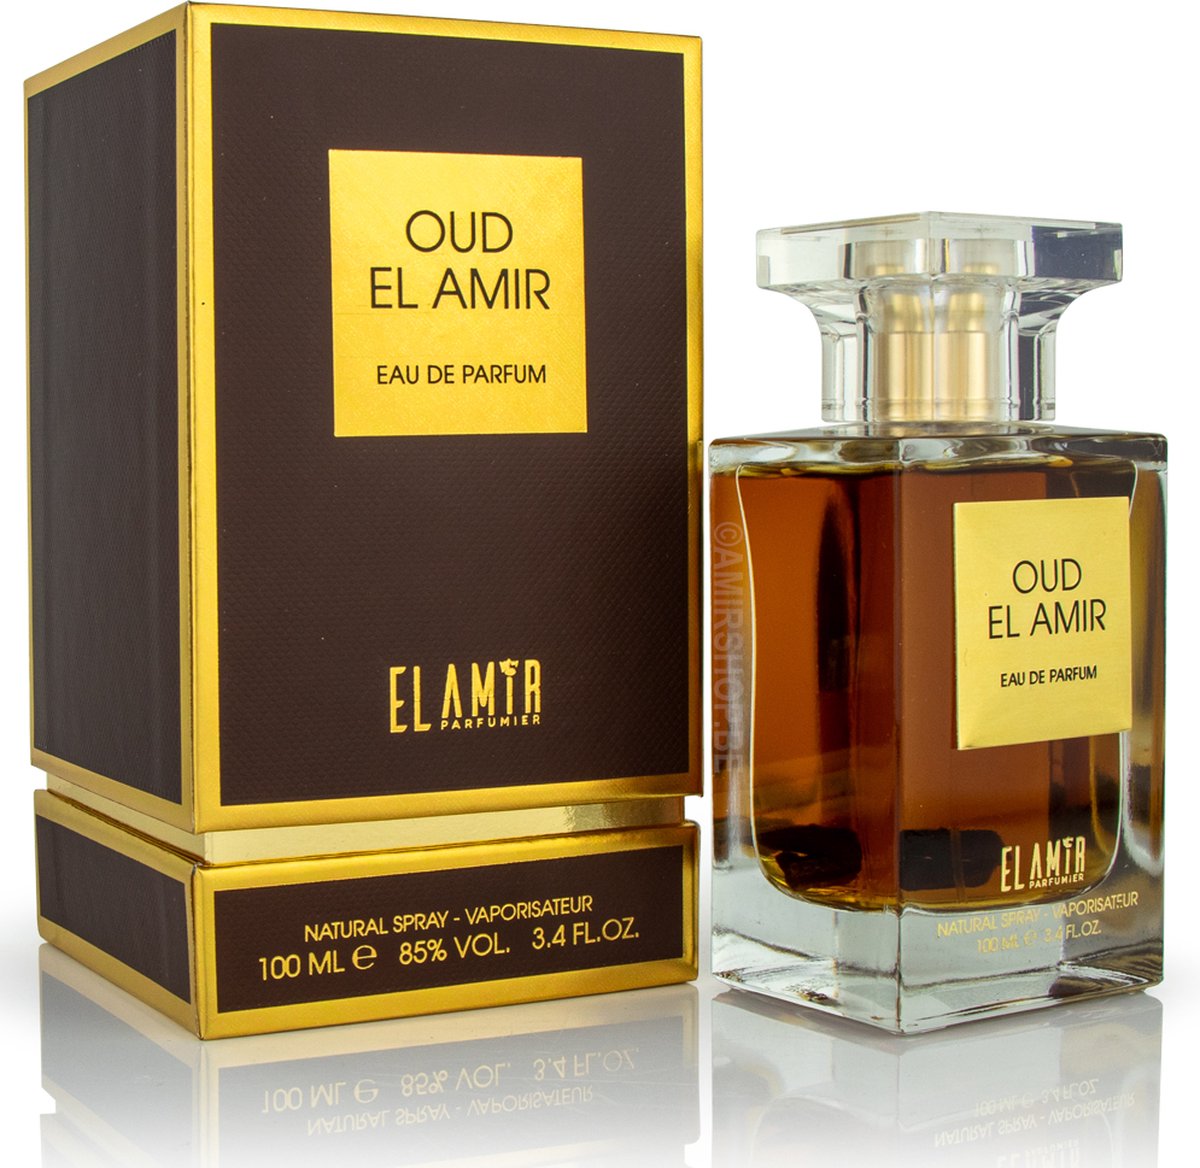 Eau de parfum Oud ELAMIR 100ML - EL AMIR Parfumier